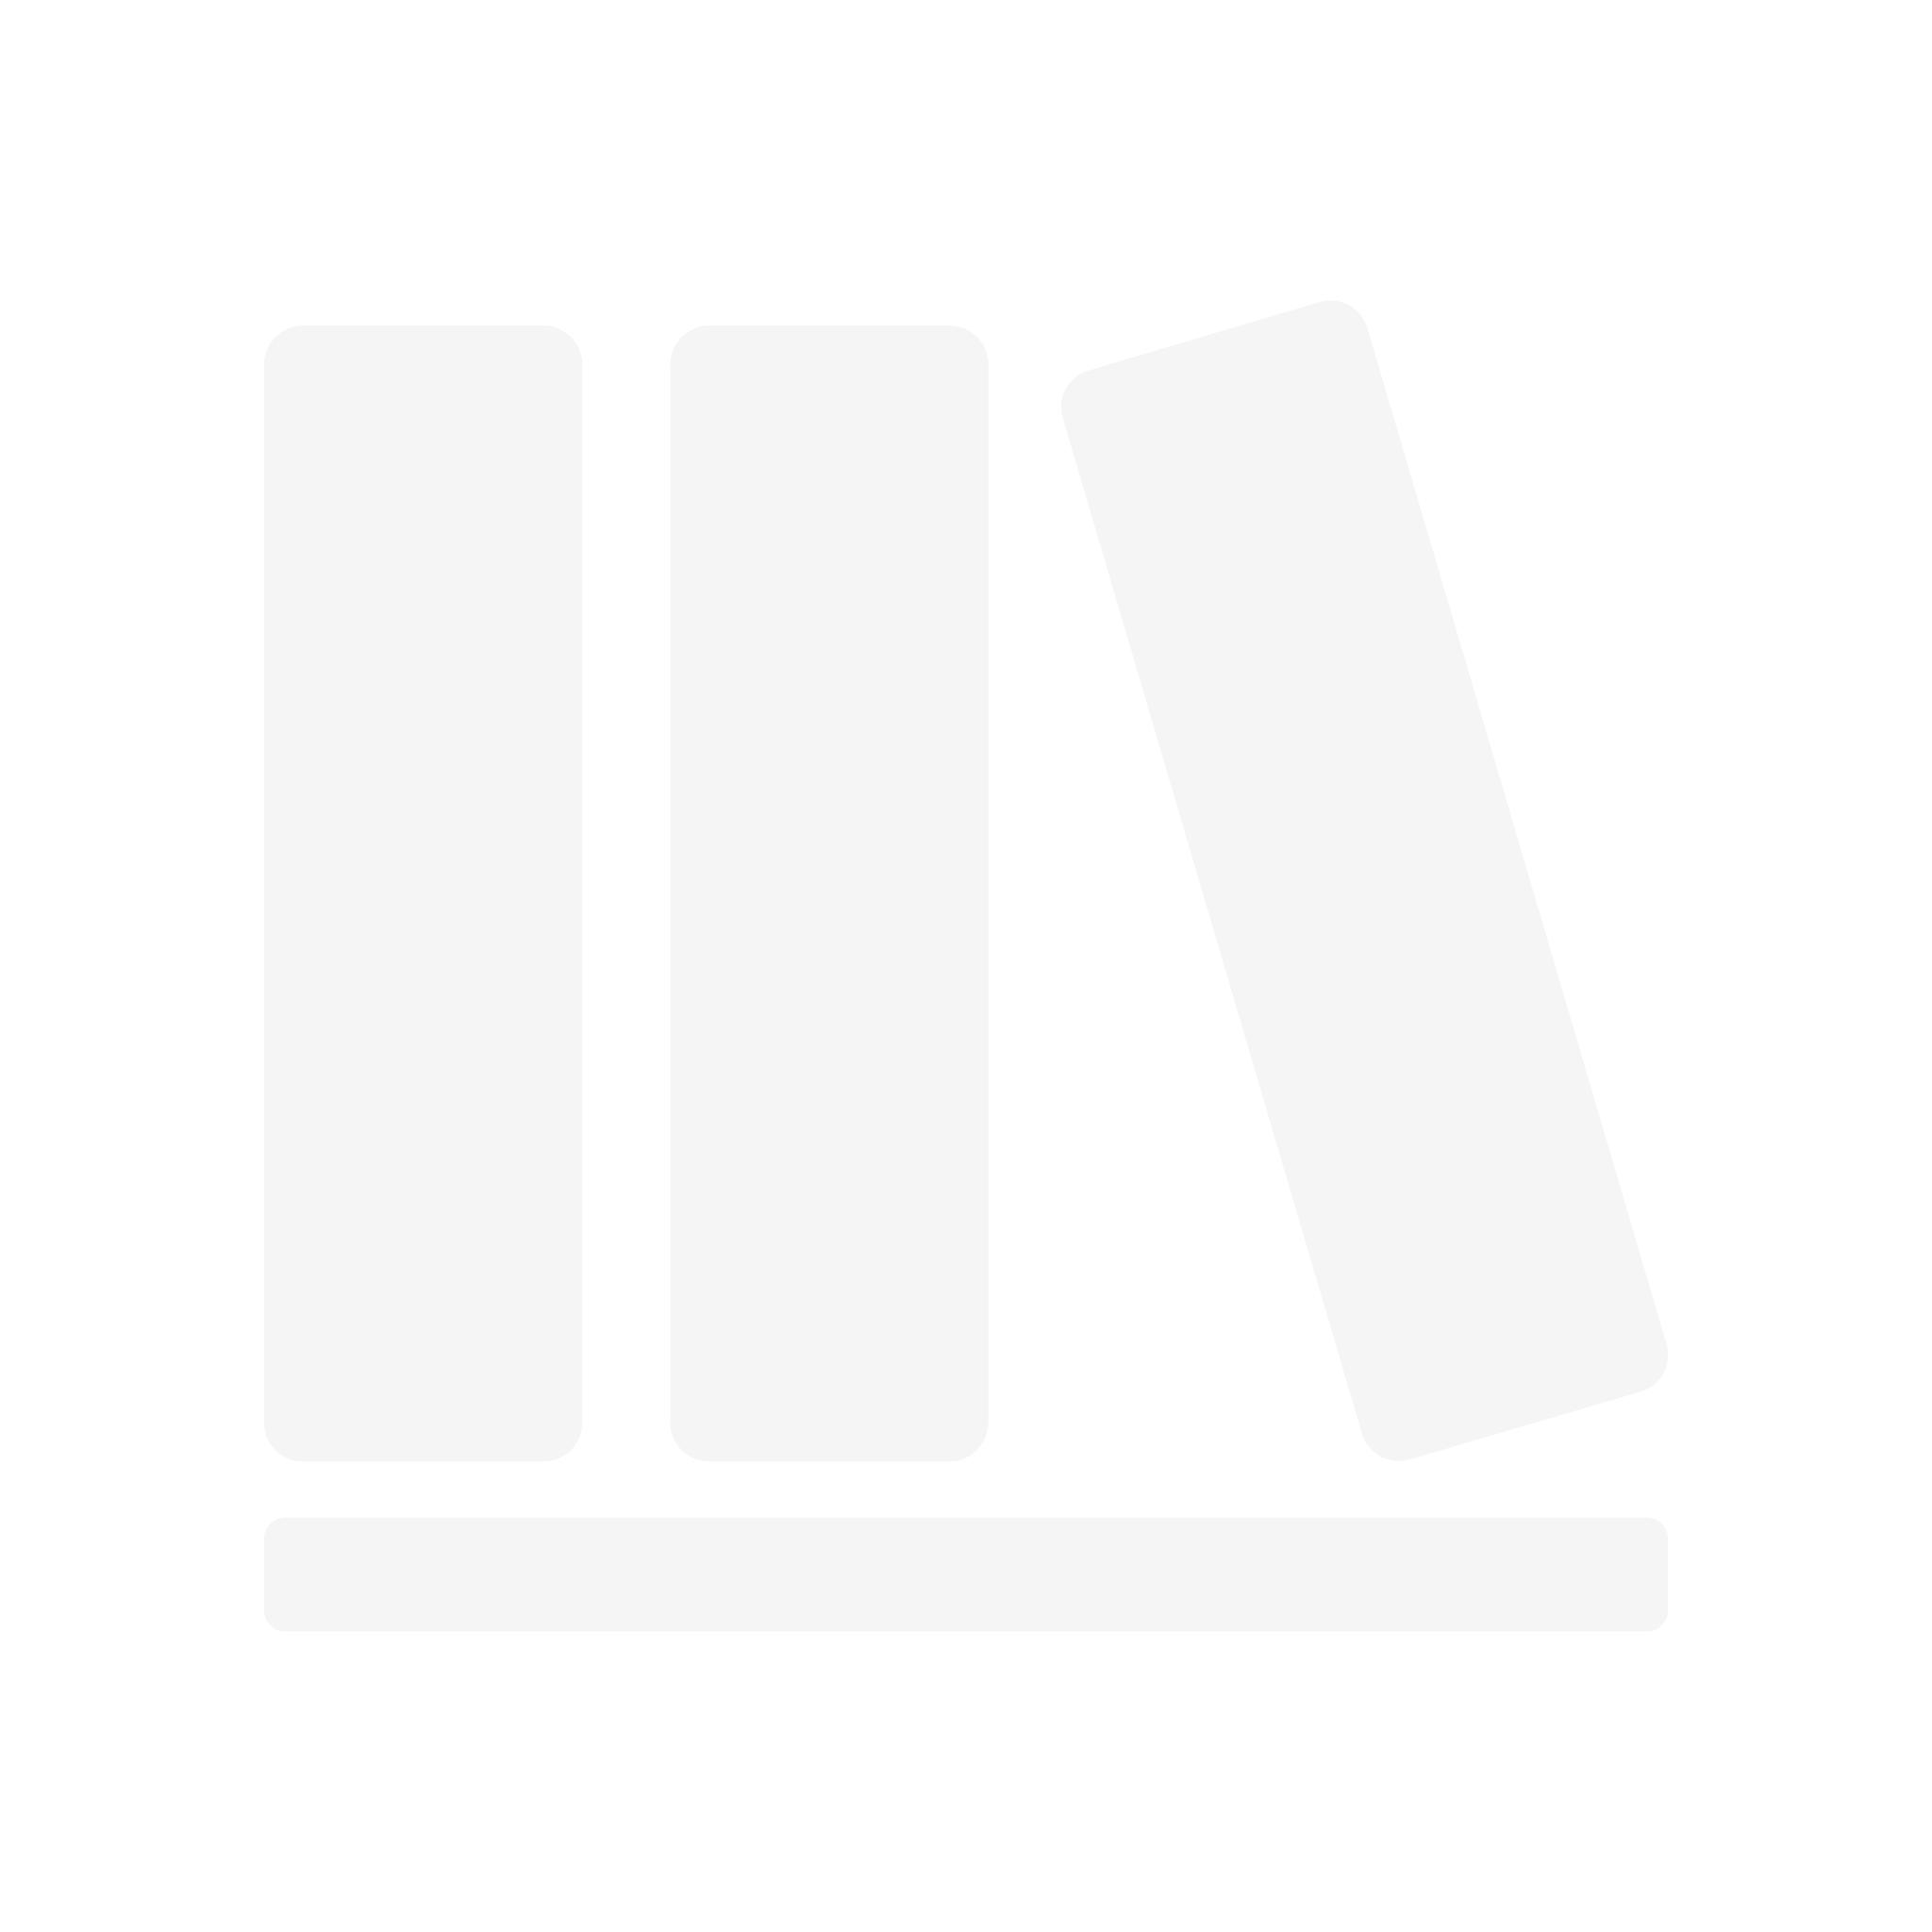 storygraph logo, a white stylized pile of books